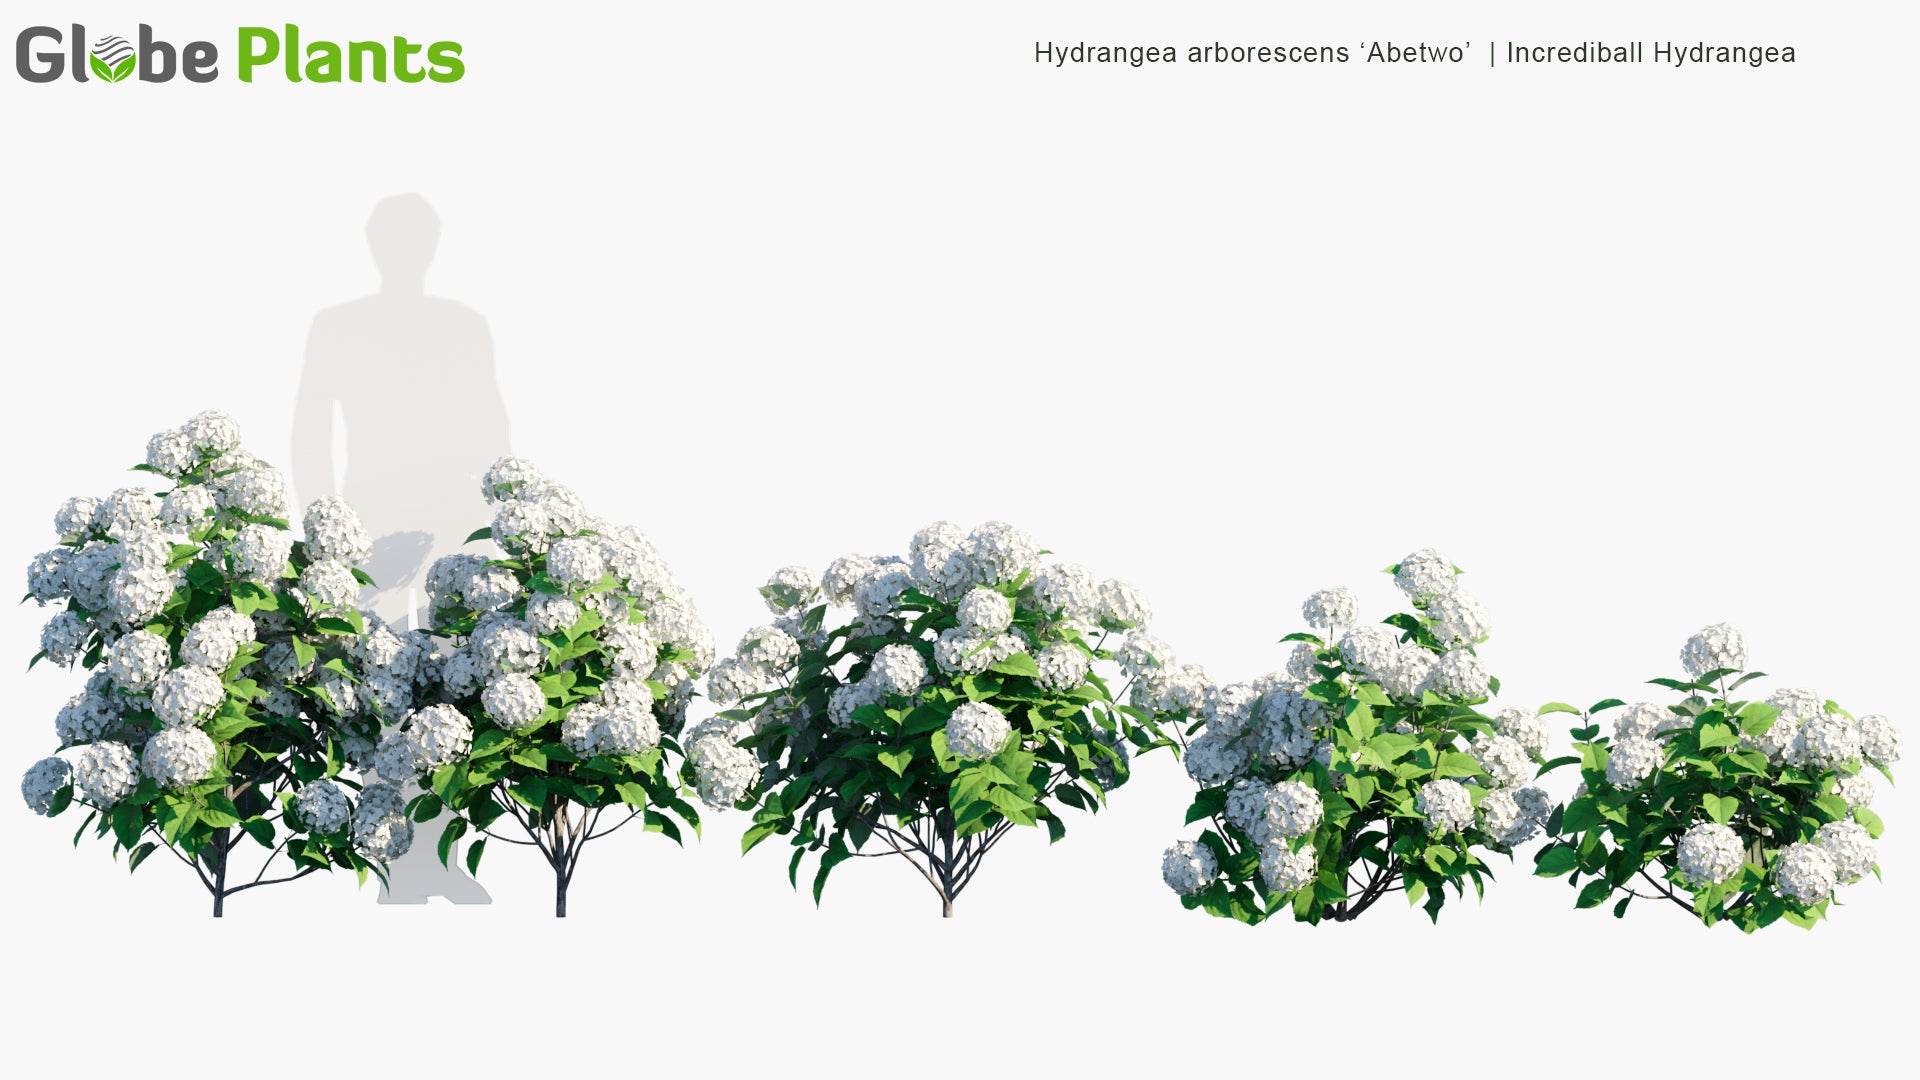 Hydrangea Arborescens 'Abetwo' - Incrediball Hydrangea